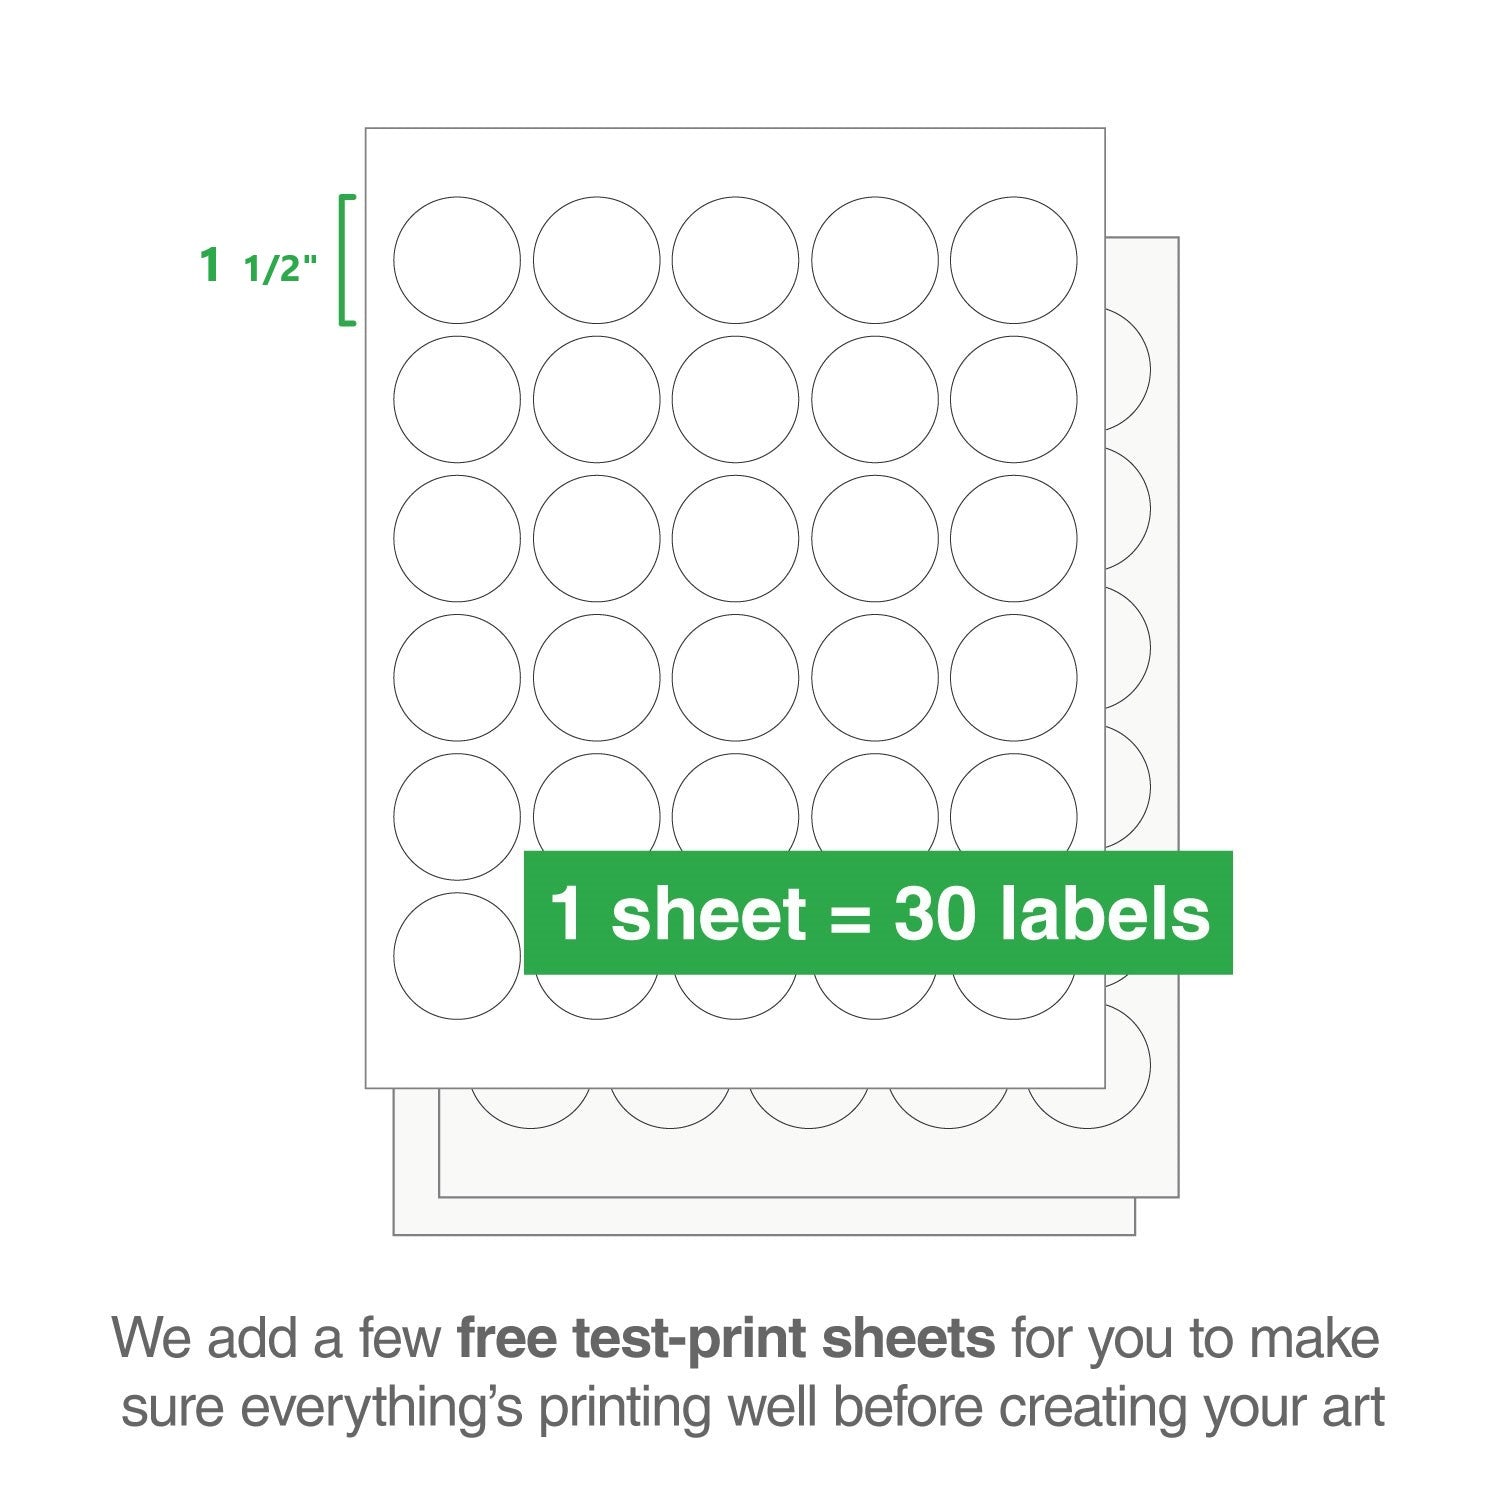 Premium 5 x 7 Matte Inkjet Photo Paper - 20 Sheet